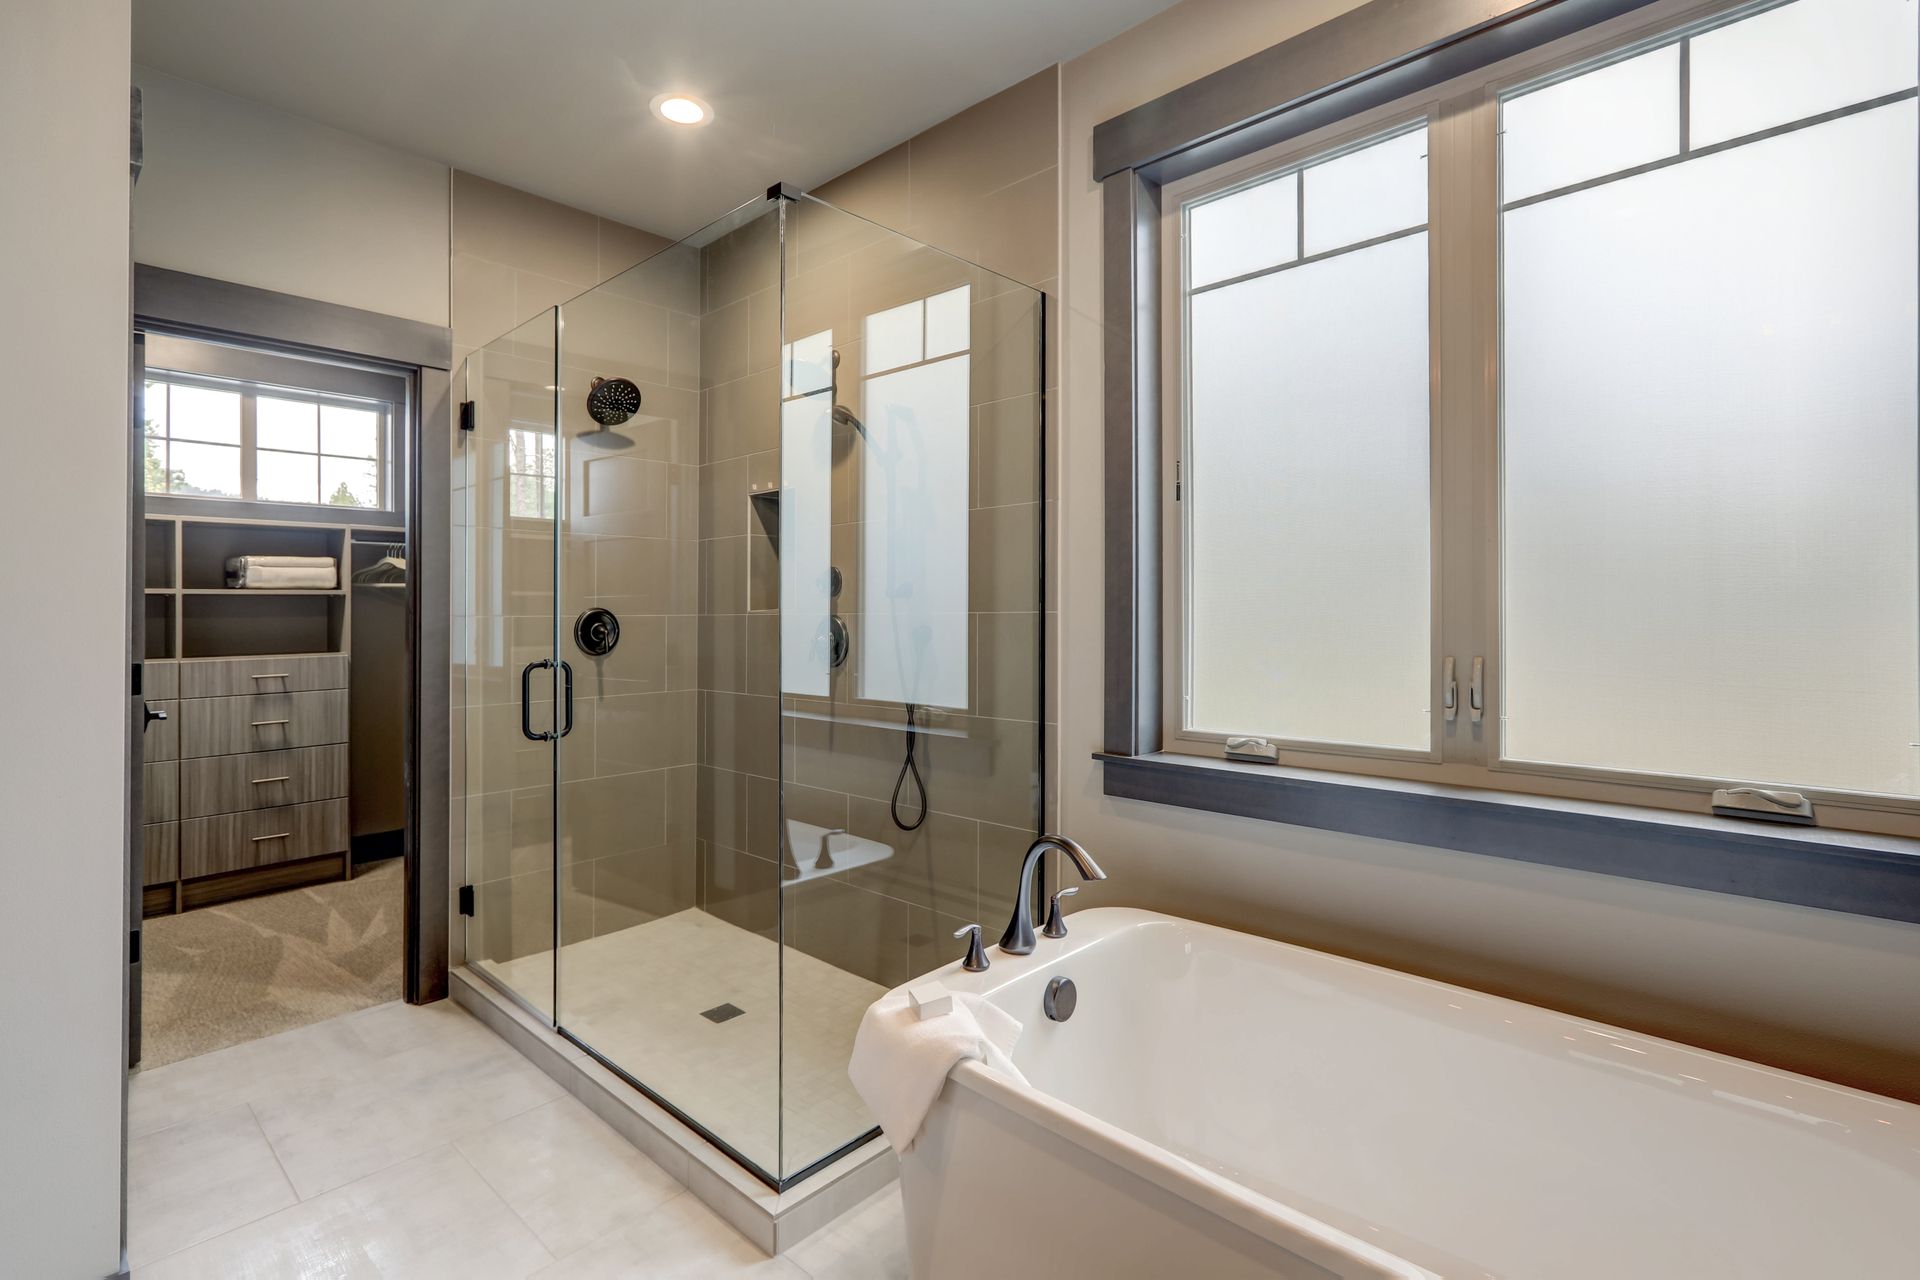 Modern bathroom interior with a glass walk-in shower, a white bathtub, and a spacious walk-in closet.